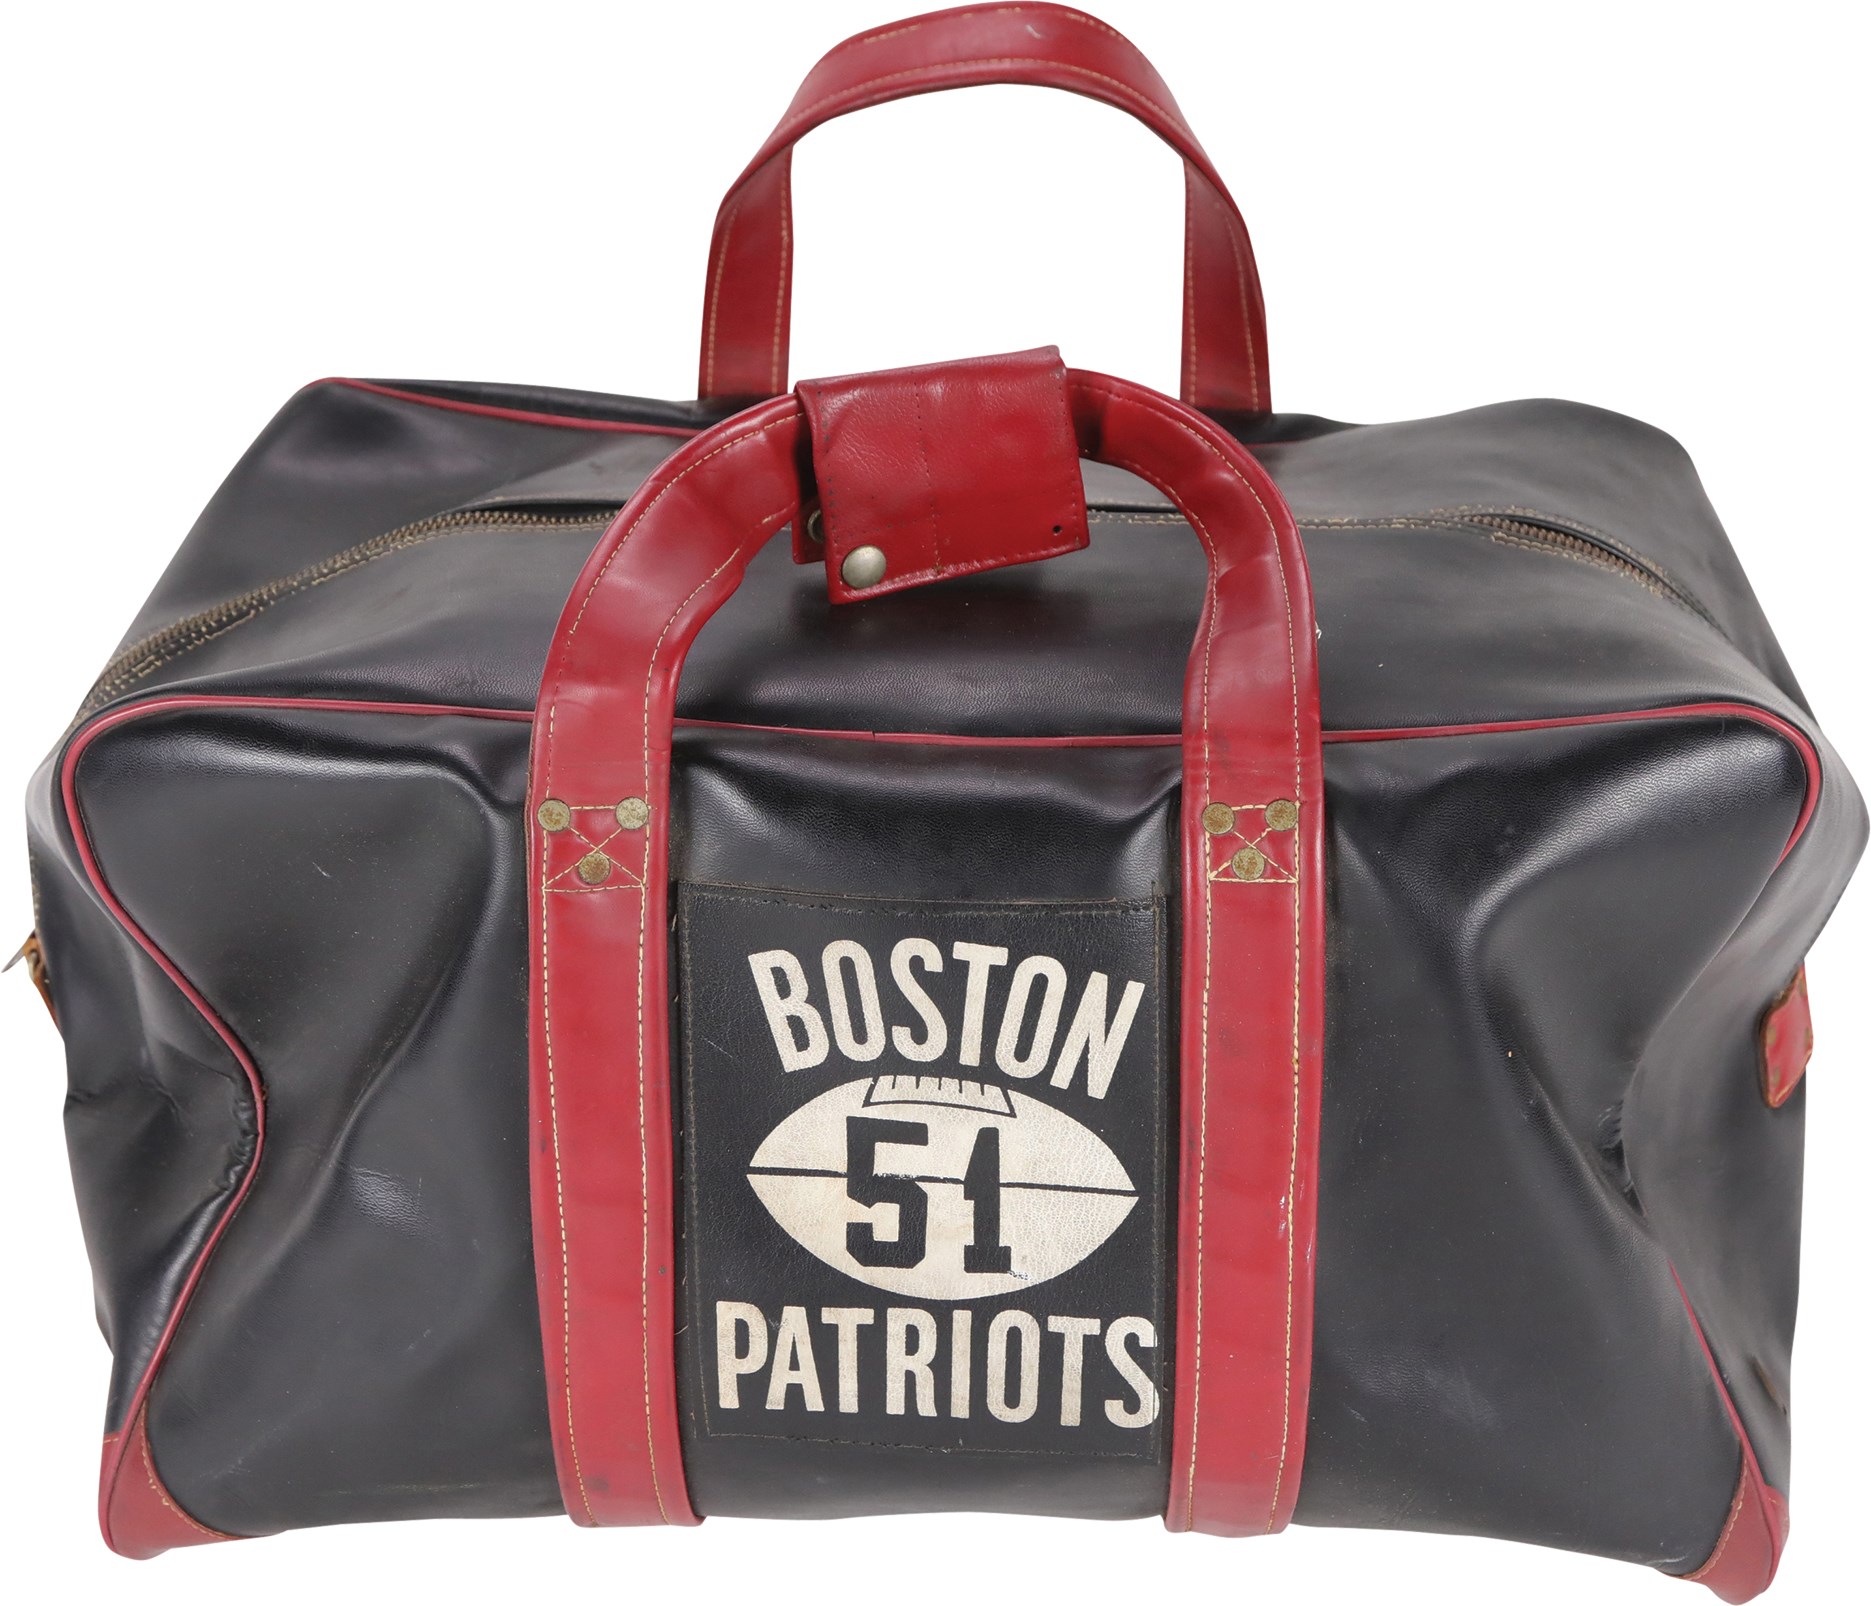 - 1960s Boston Patriots Team Issued Equipment Bag